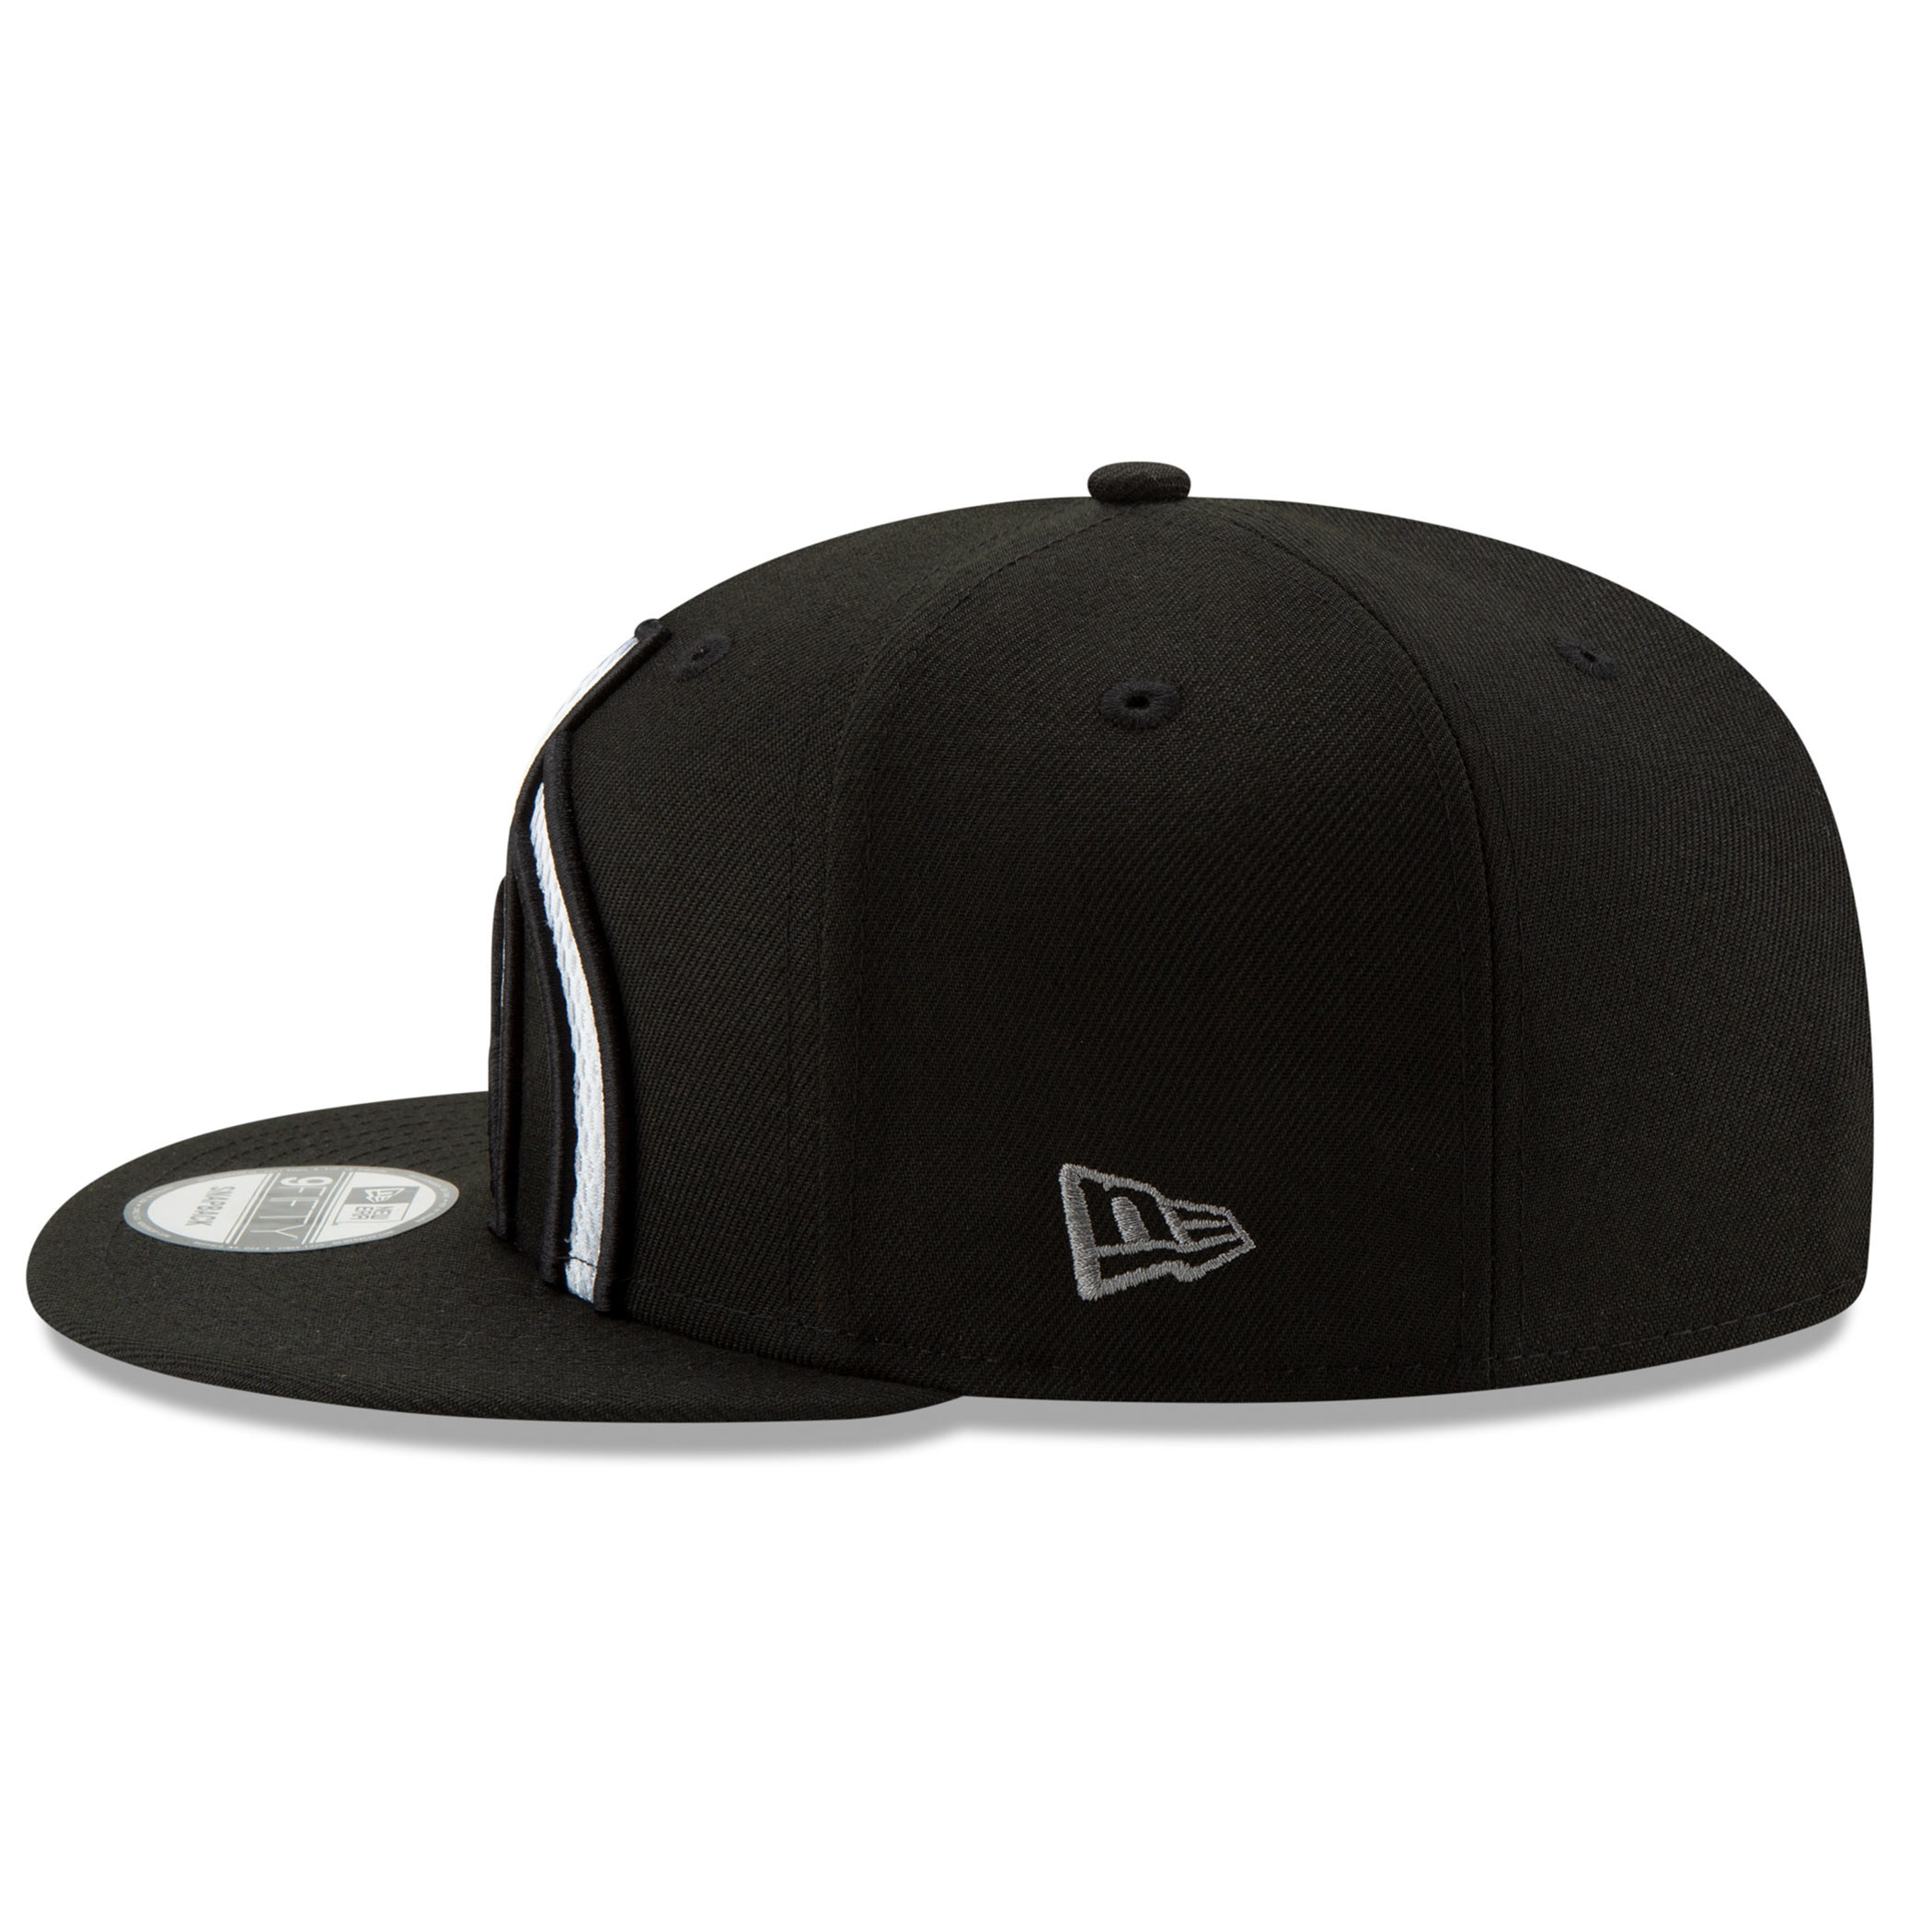 PYM Technologies Embro Cap Hat Black & Navy